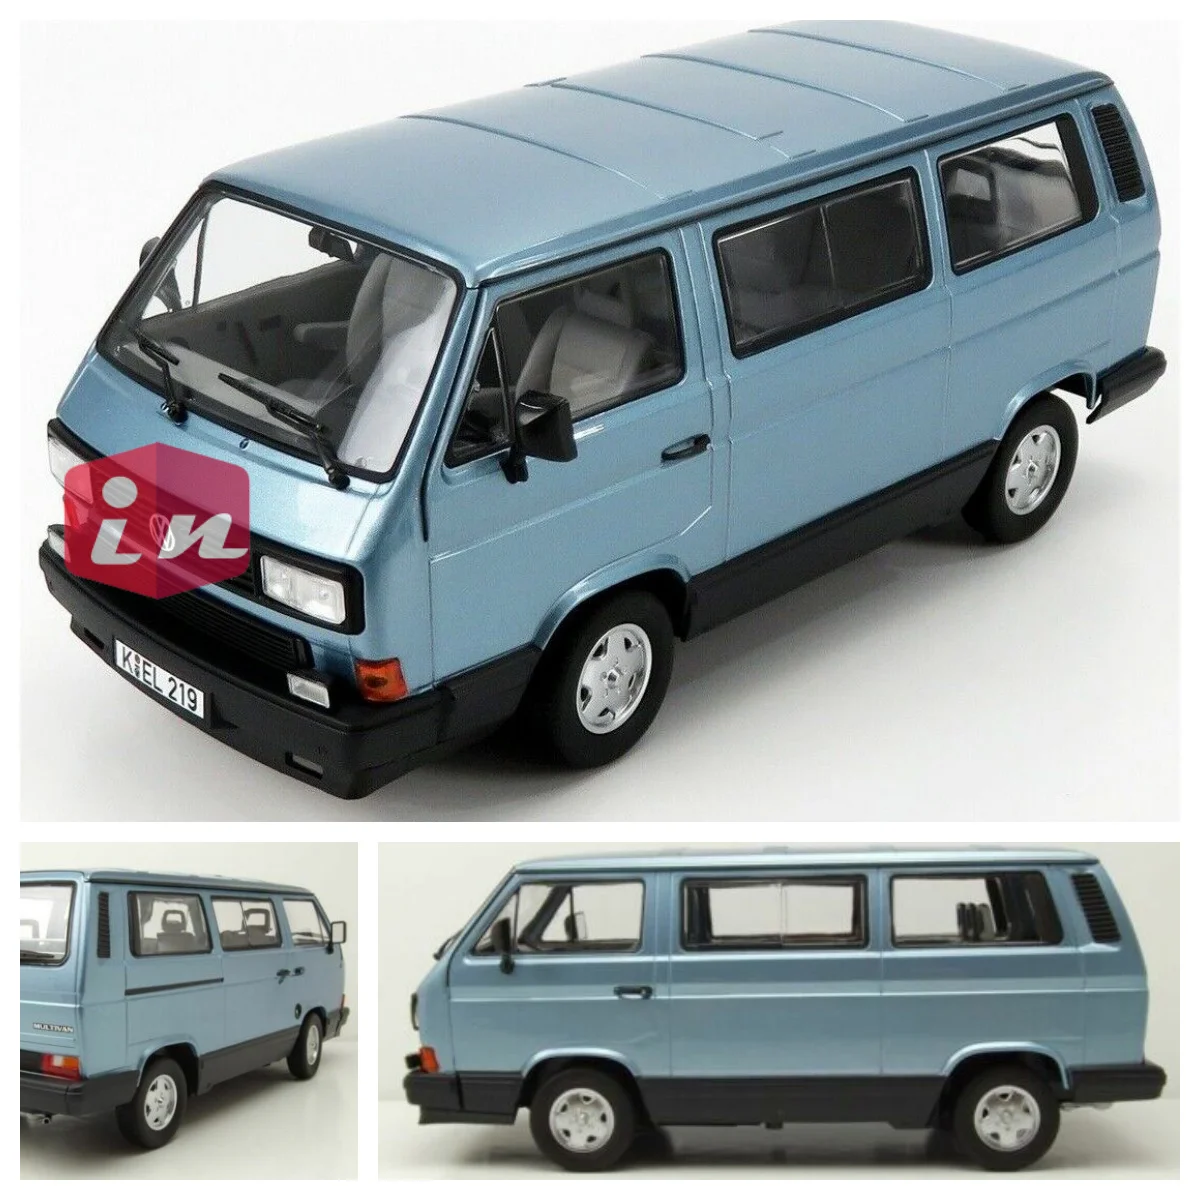 

T3 Multivan 1990 Blue Metallic, NOREV188544, échelle1/18, NOREV DieCast Model Car Collection Limited Edition Hobby Toy Car